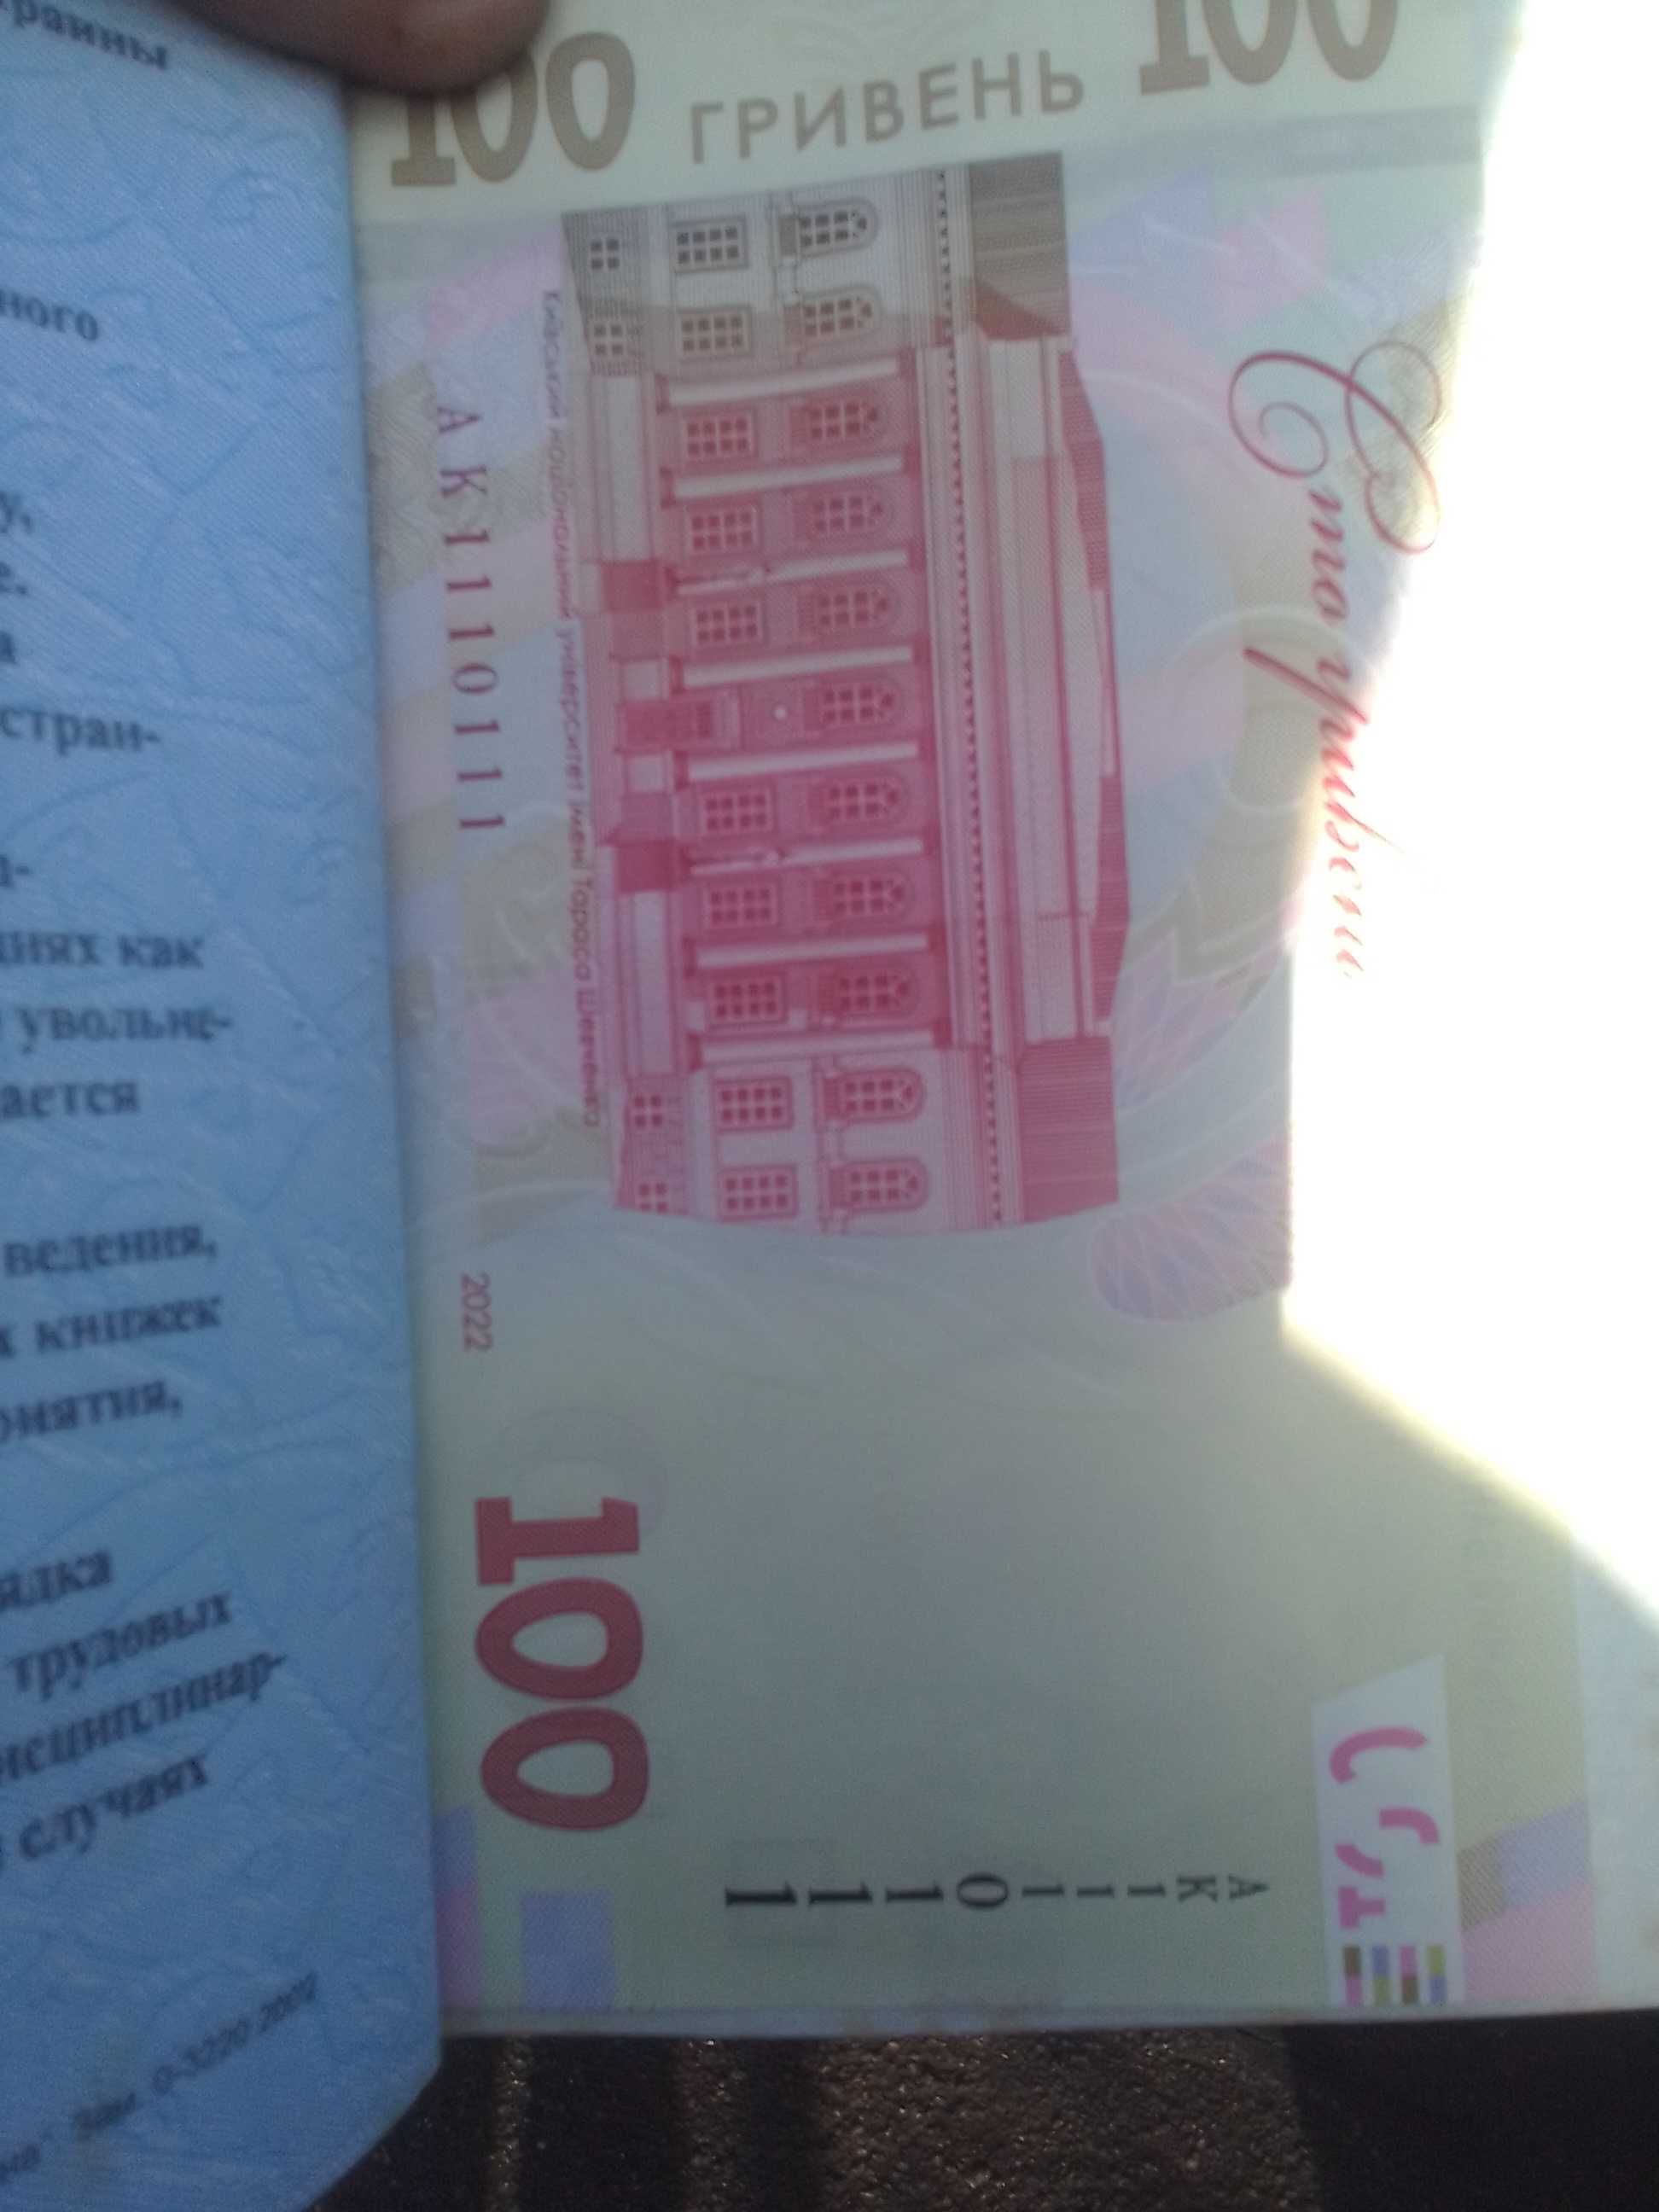 100 грн банкнота з номером Ак1110111